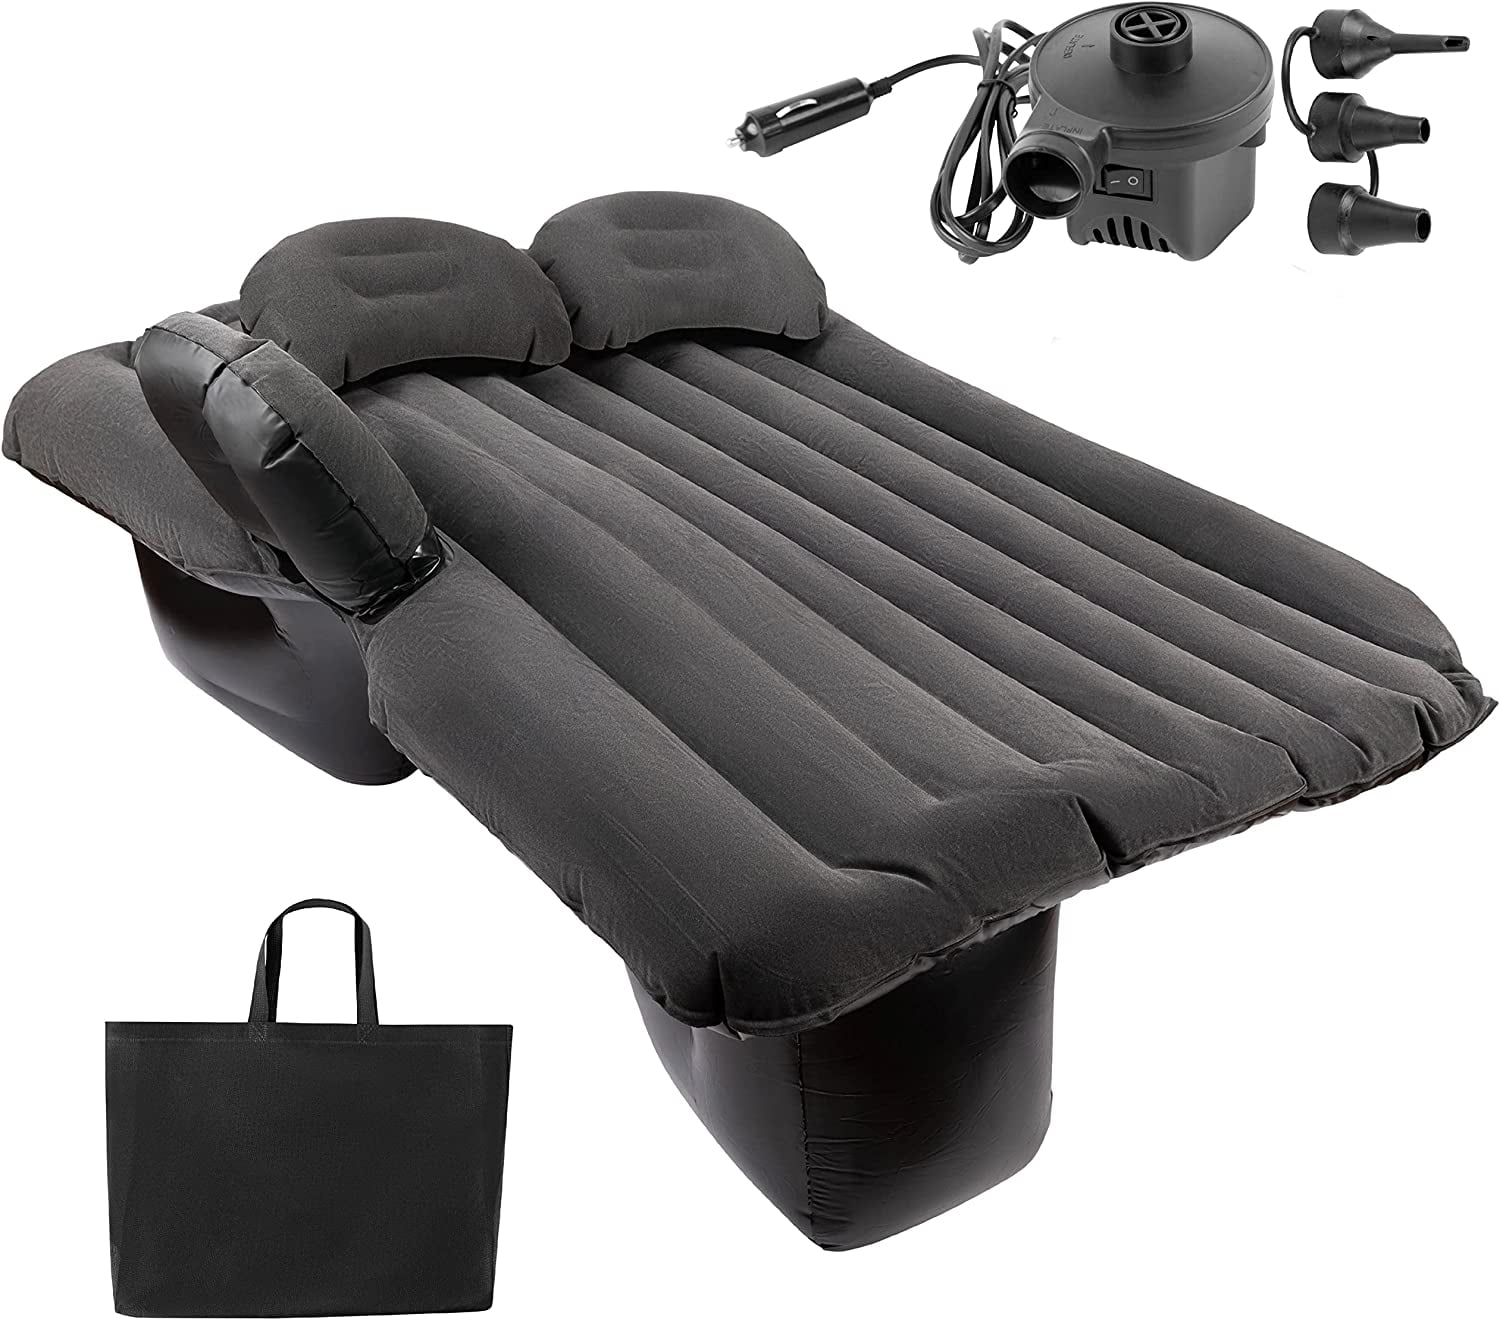 Birmingfive Car Travel Inflatable Mattress Back Seat Gap Pad Air Bed Cushion Camping Air Couch 